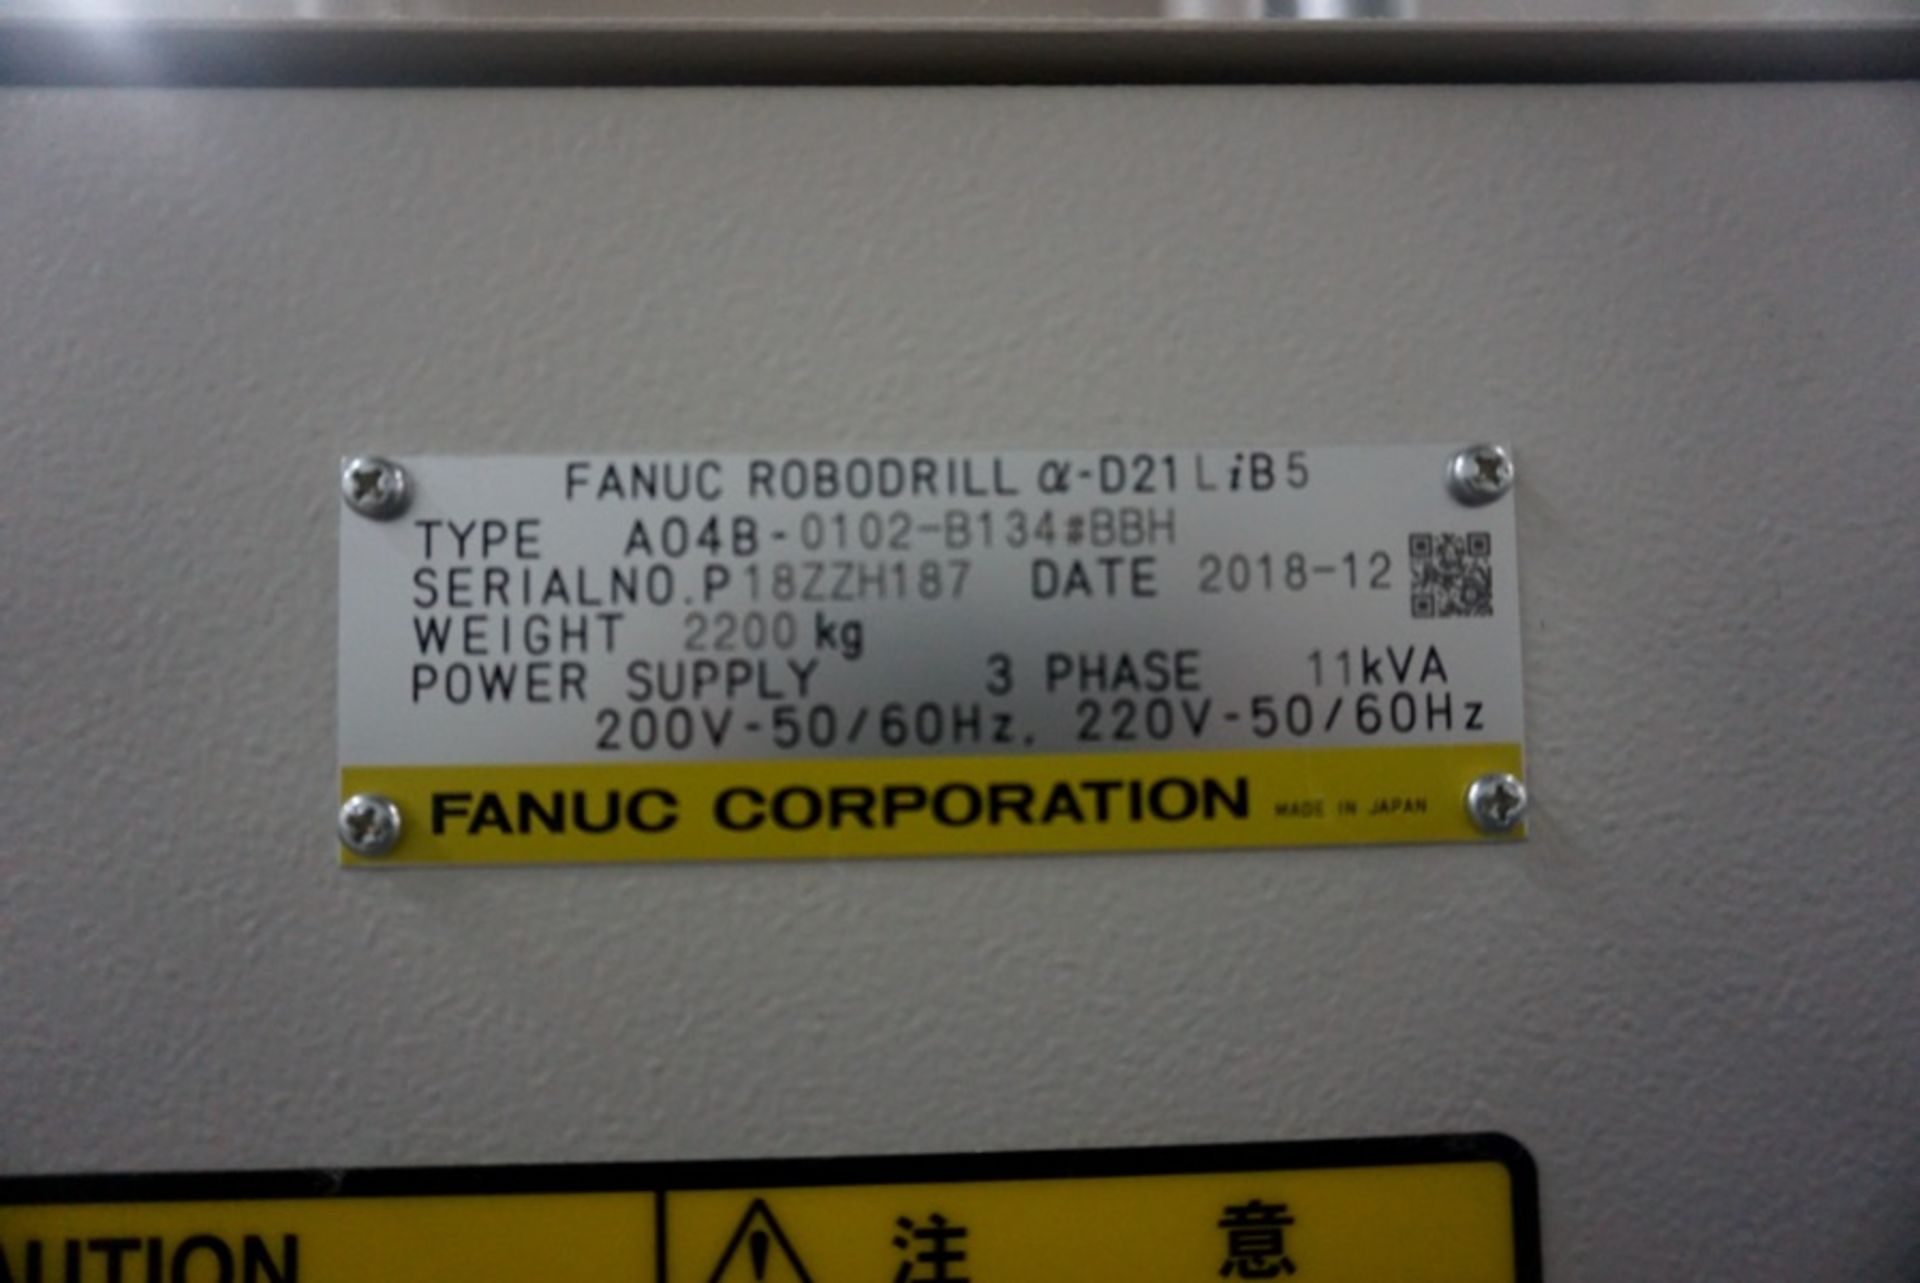 Fanuc Robodrill D21LiB5 5-Axis Ready Vertical Machining Center, Fanuc 31i-B5 Control, New 2018 - Image 6 of 6